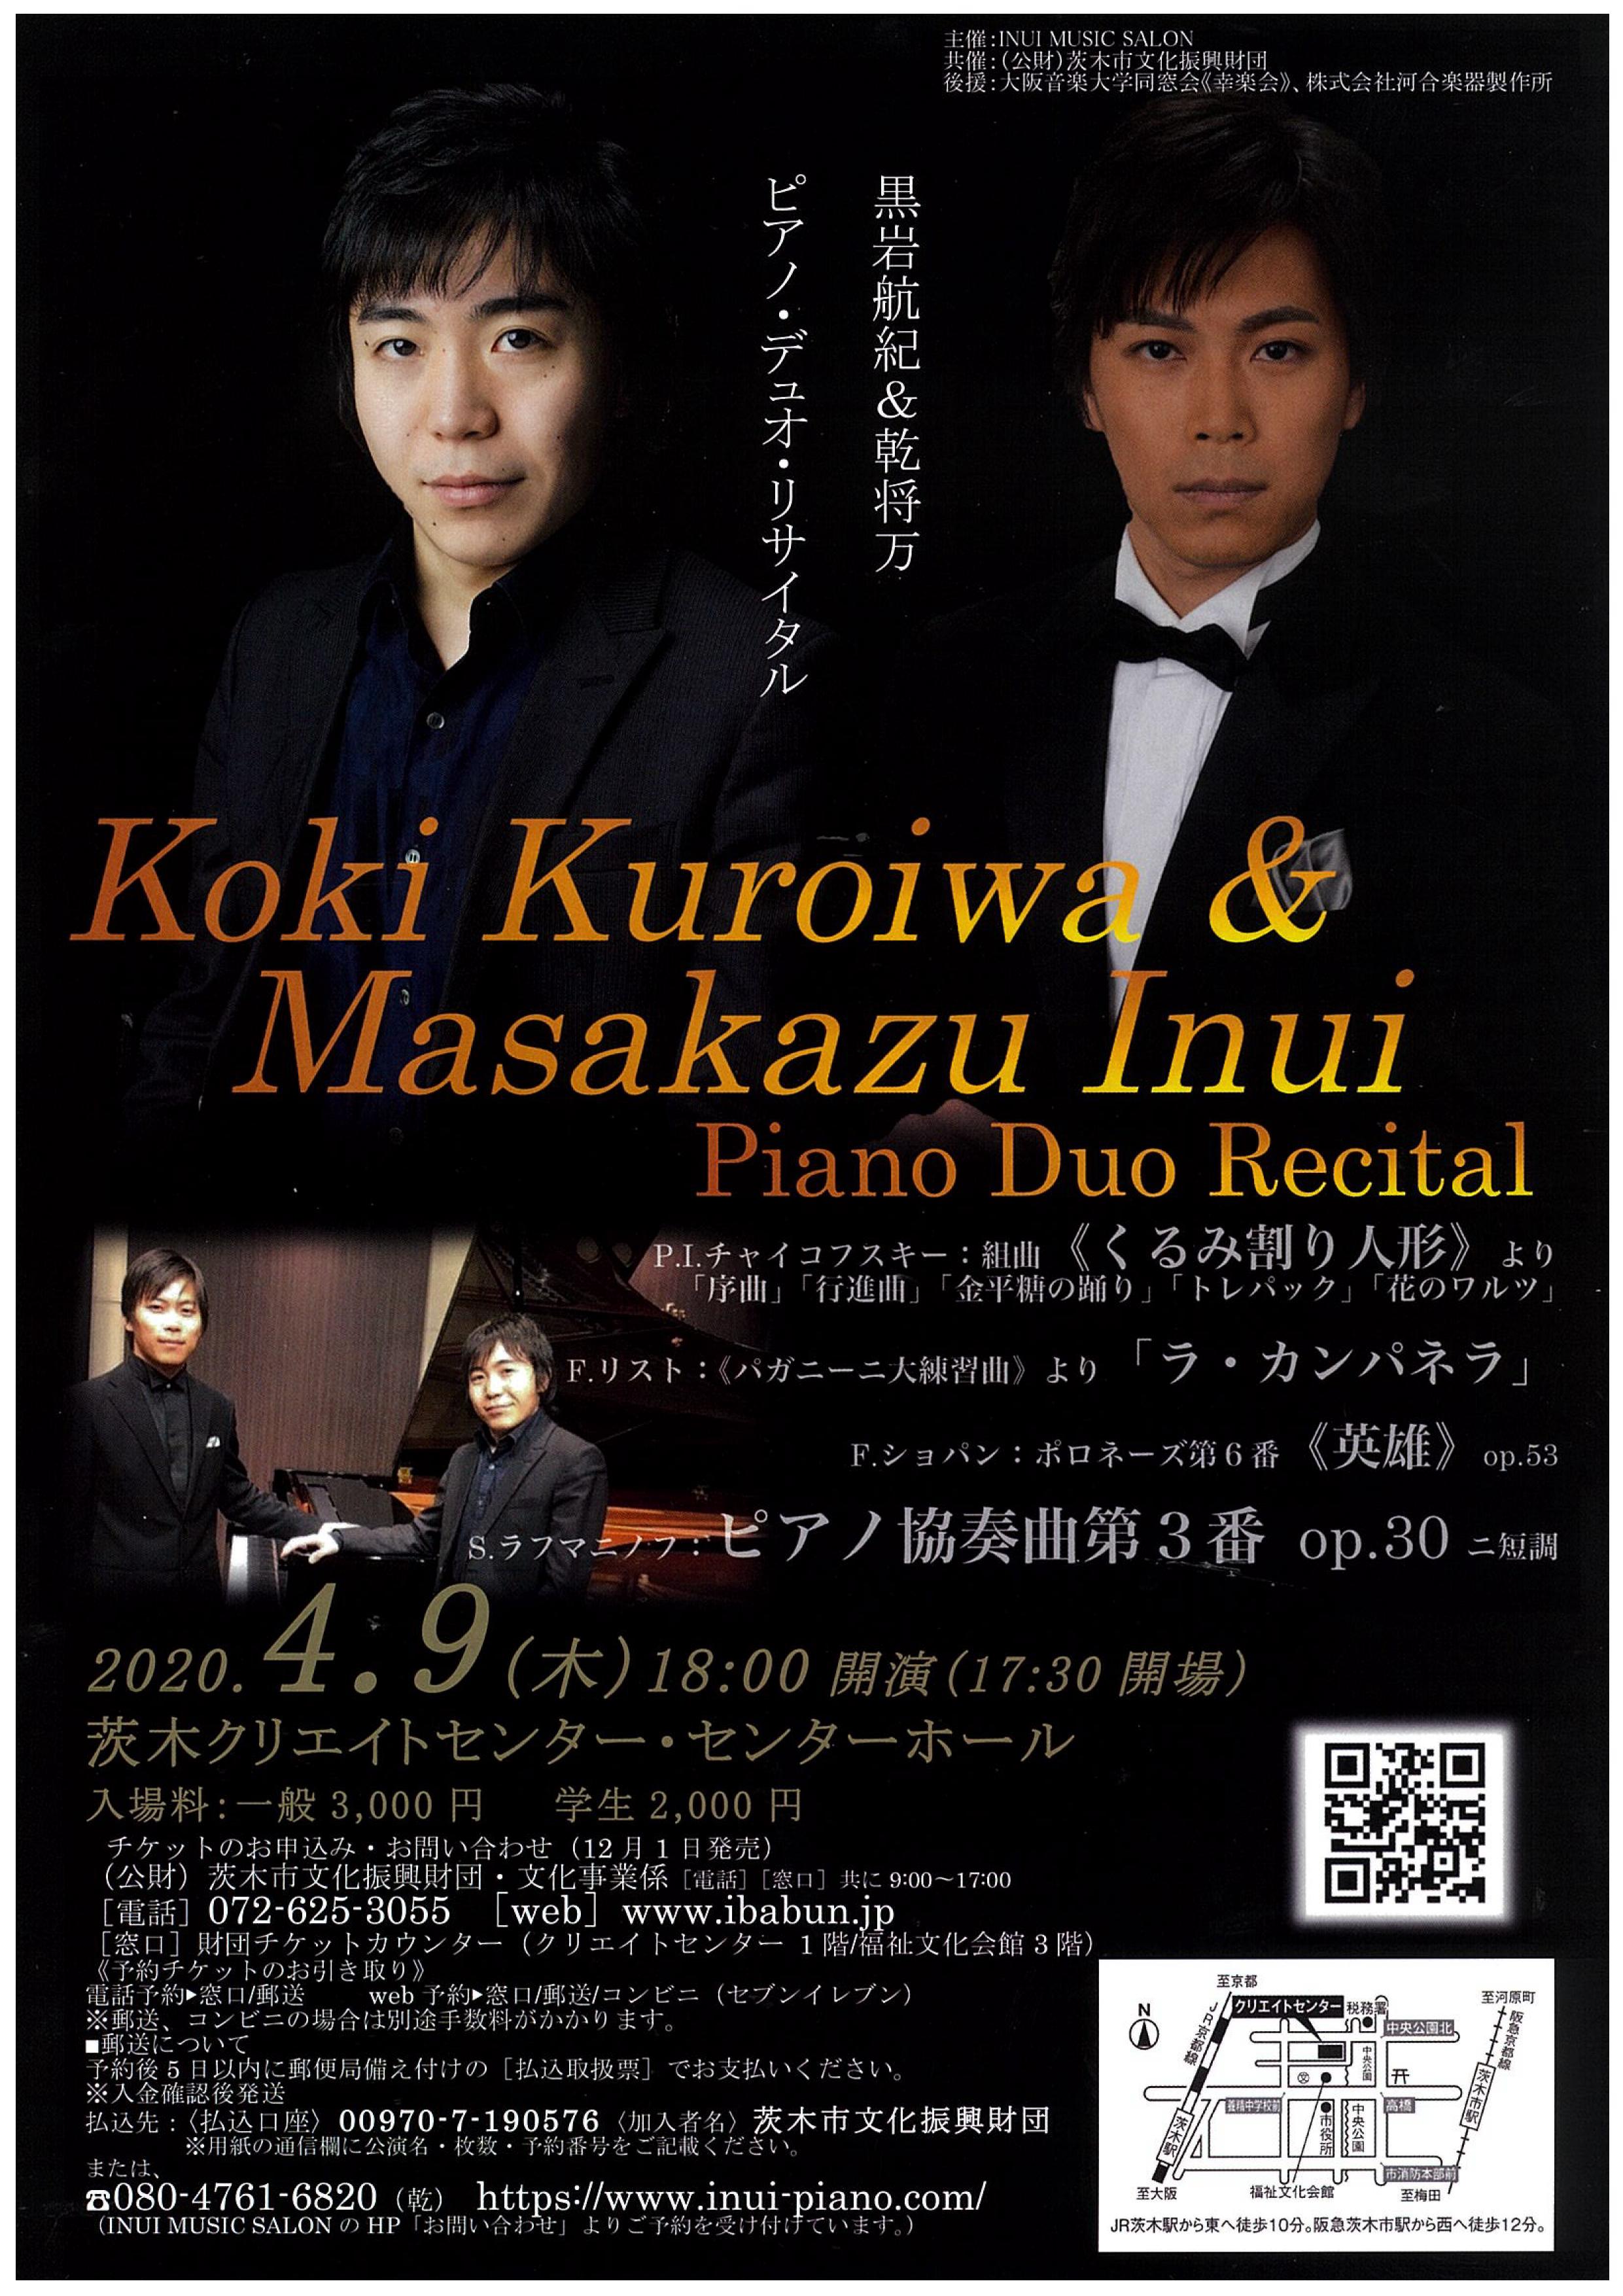 【振替公演】Koki Kuroiwa & Masakazu Inui  Piano Duo Recital